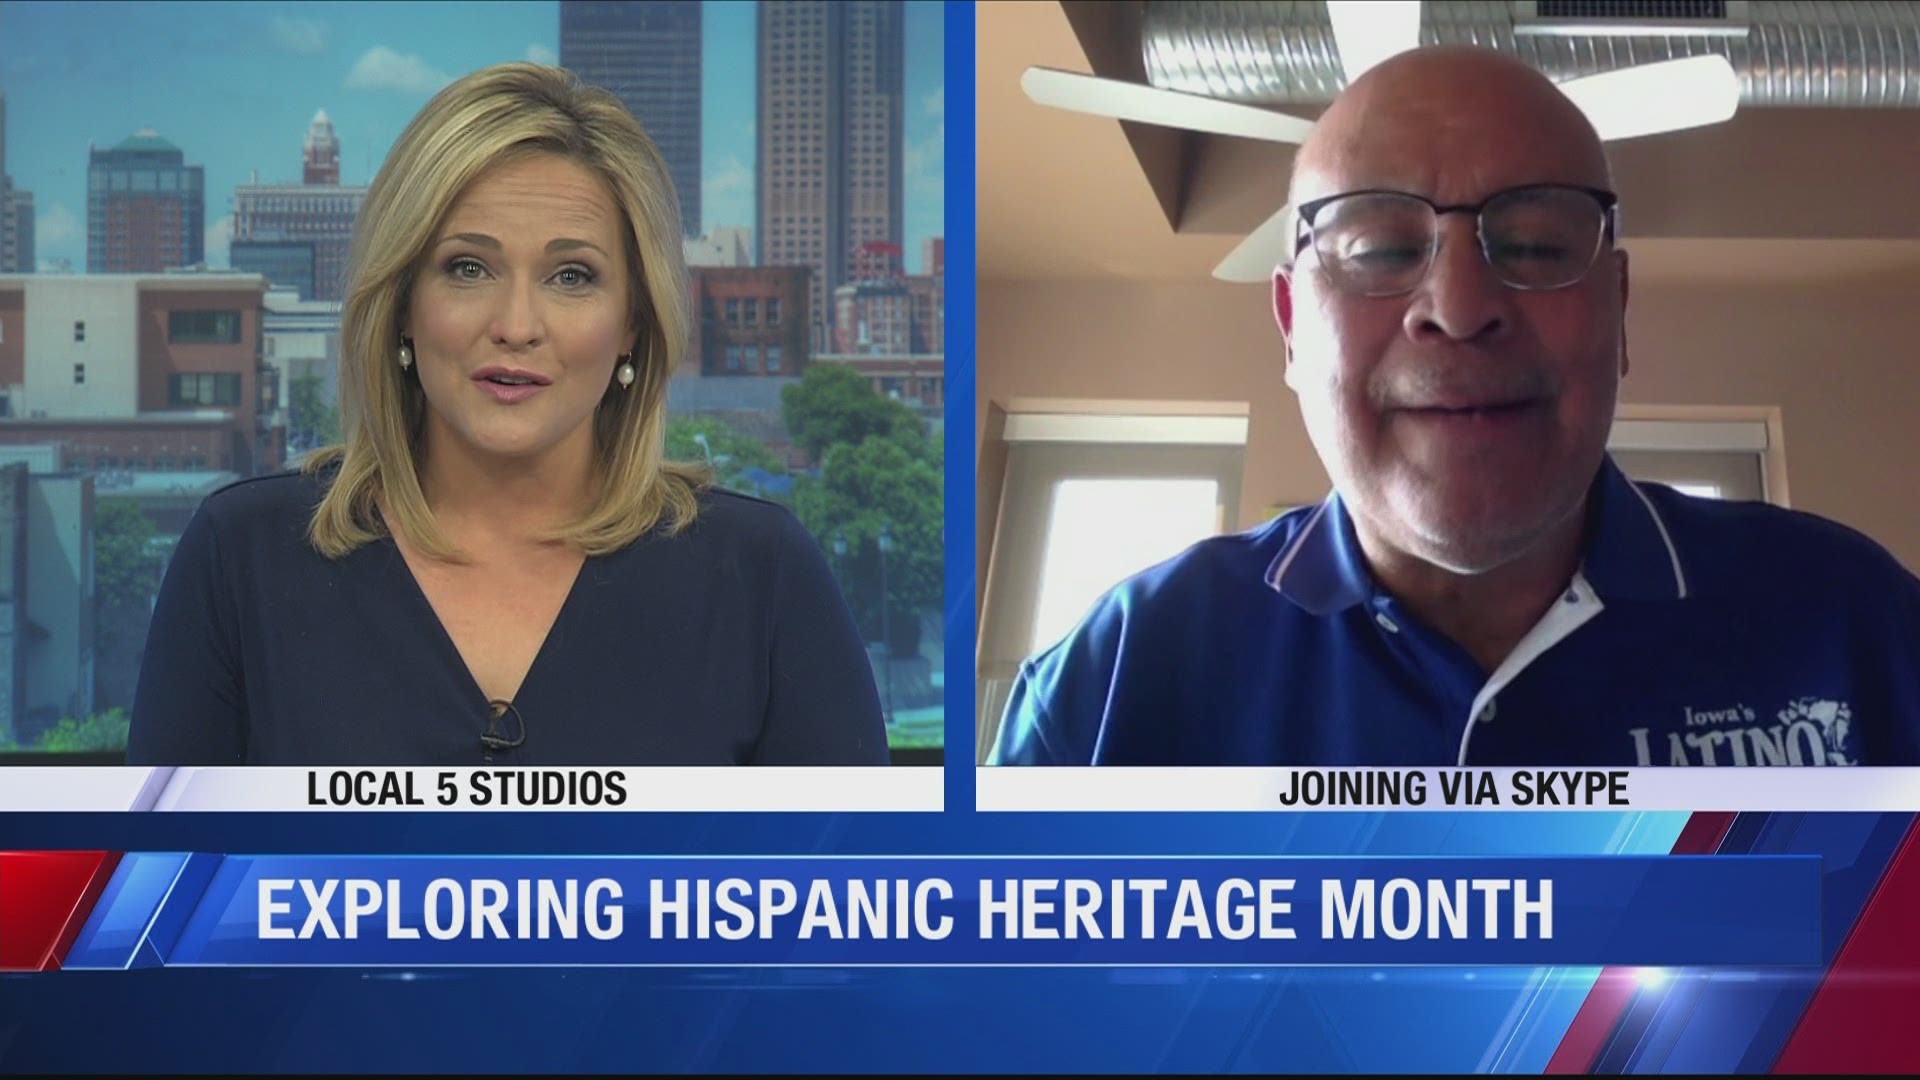 Interview with Joe Gonzalez on Hispanic Heritage Month